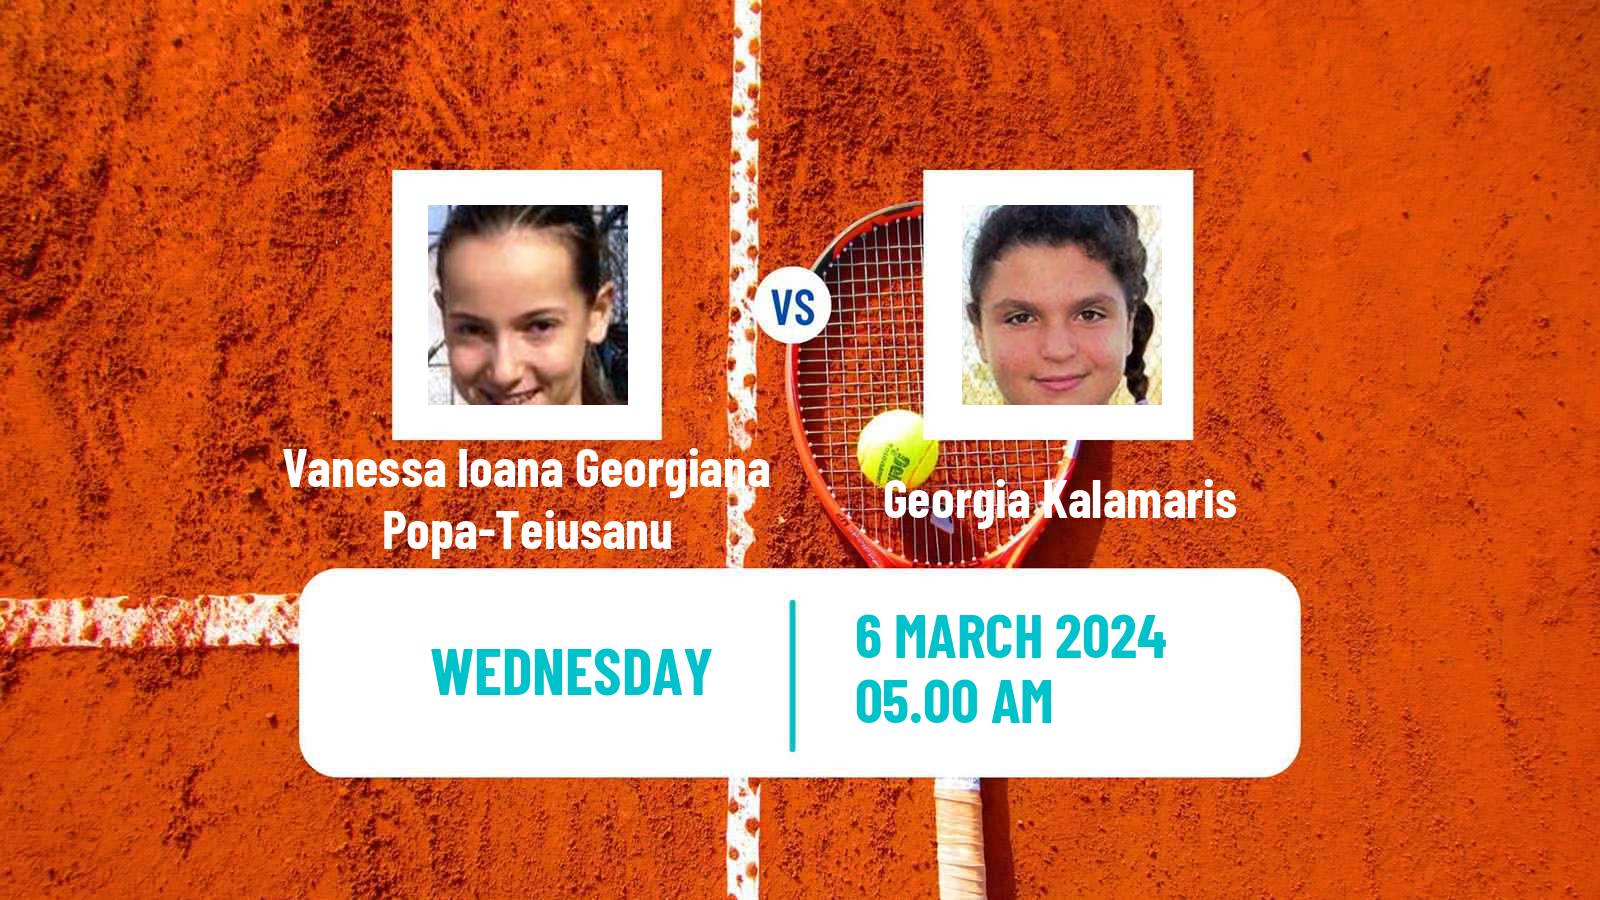 Tennis ITF W15 Sharm Elsheikh 5 Women Vanessa Ioana Georgiana Popa-Teiusanu - Georgia Kalamaris